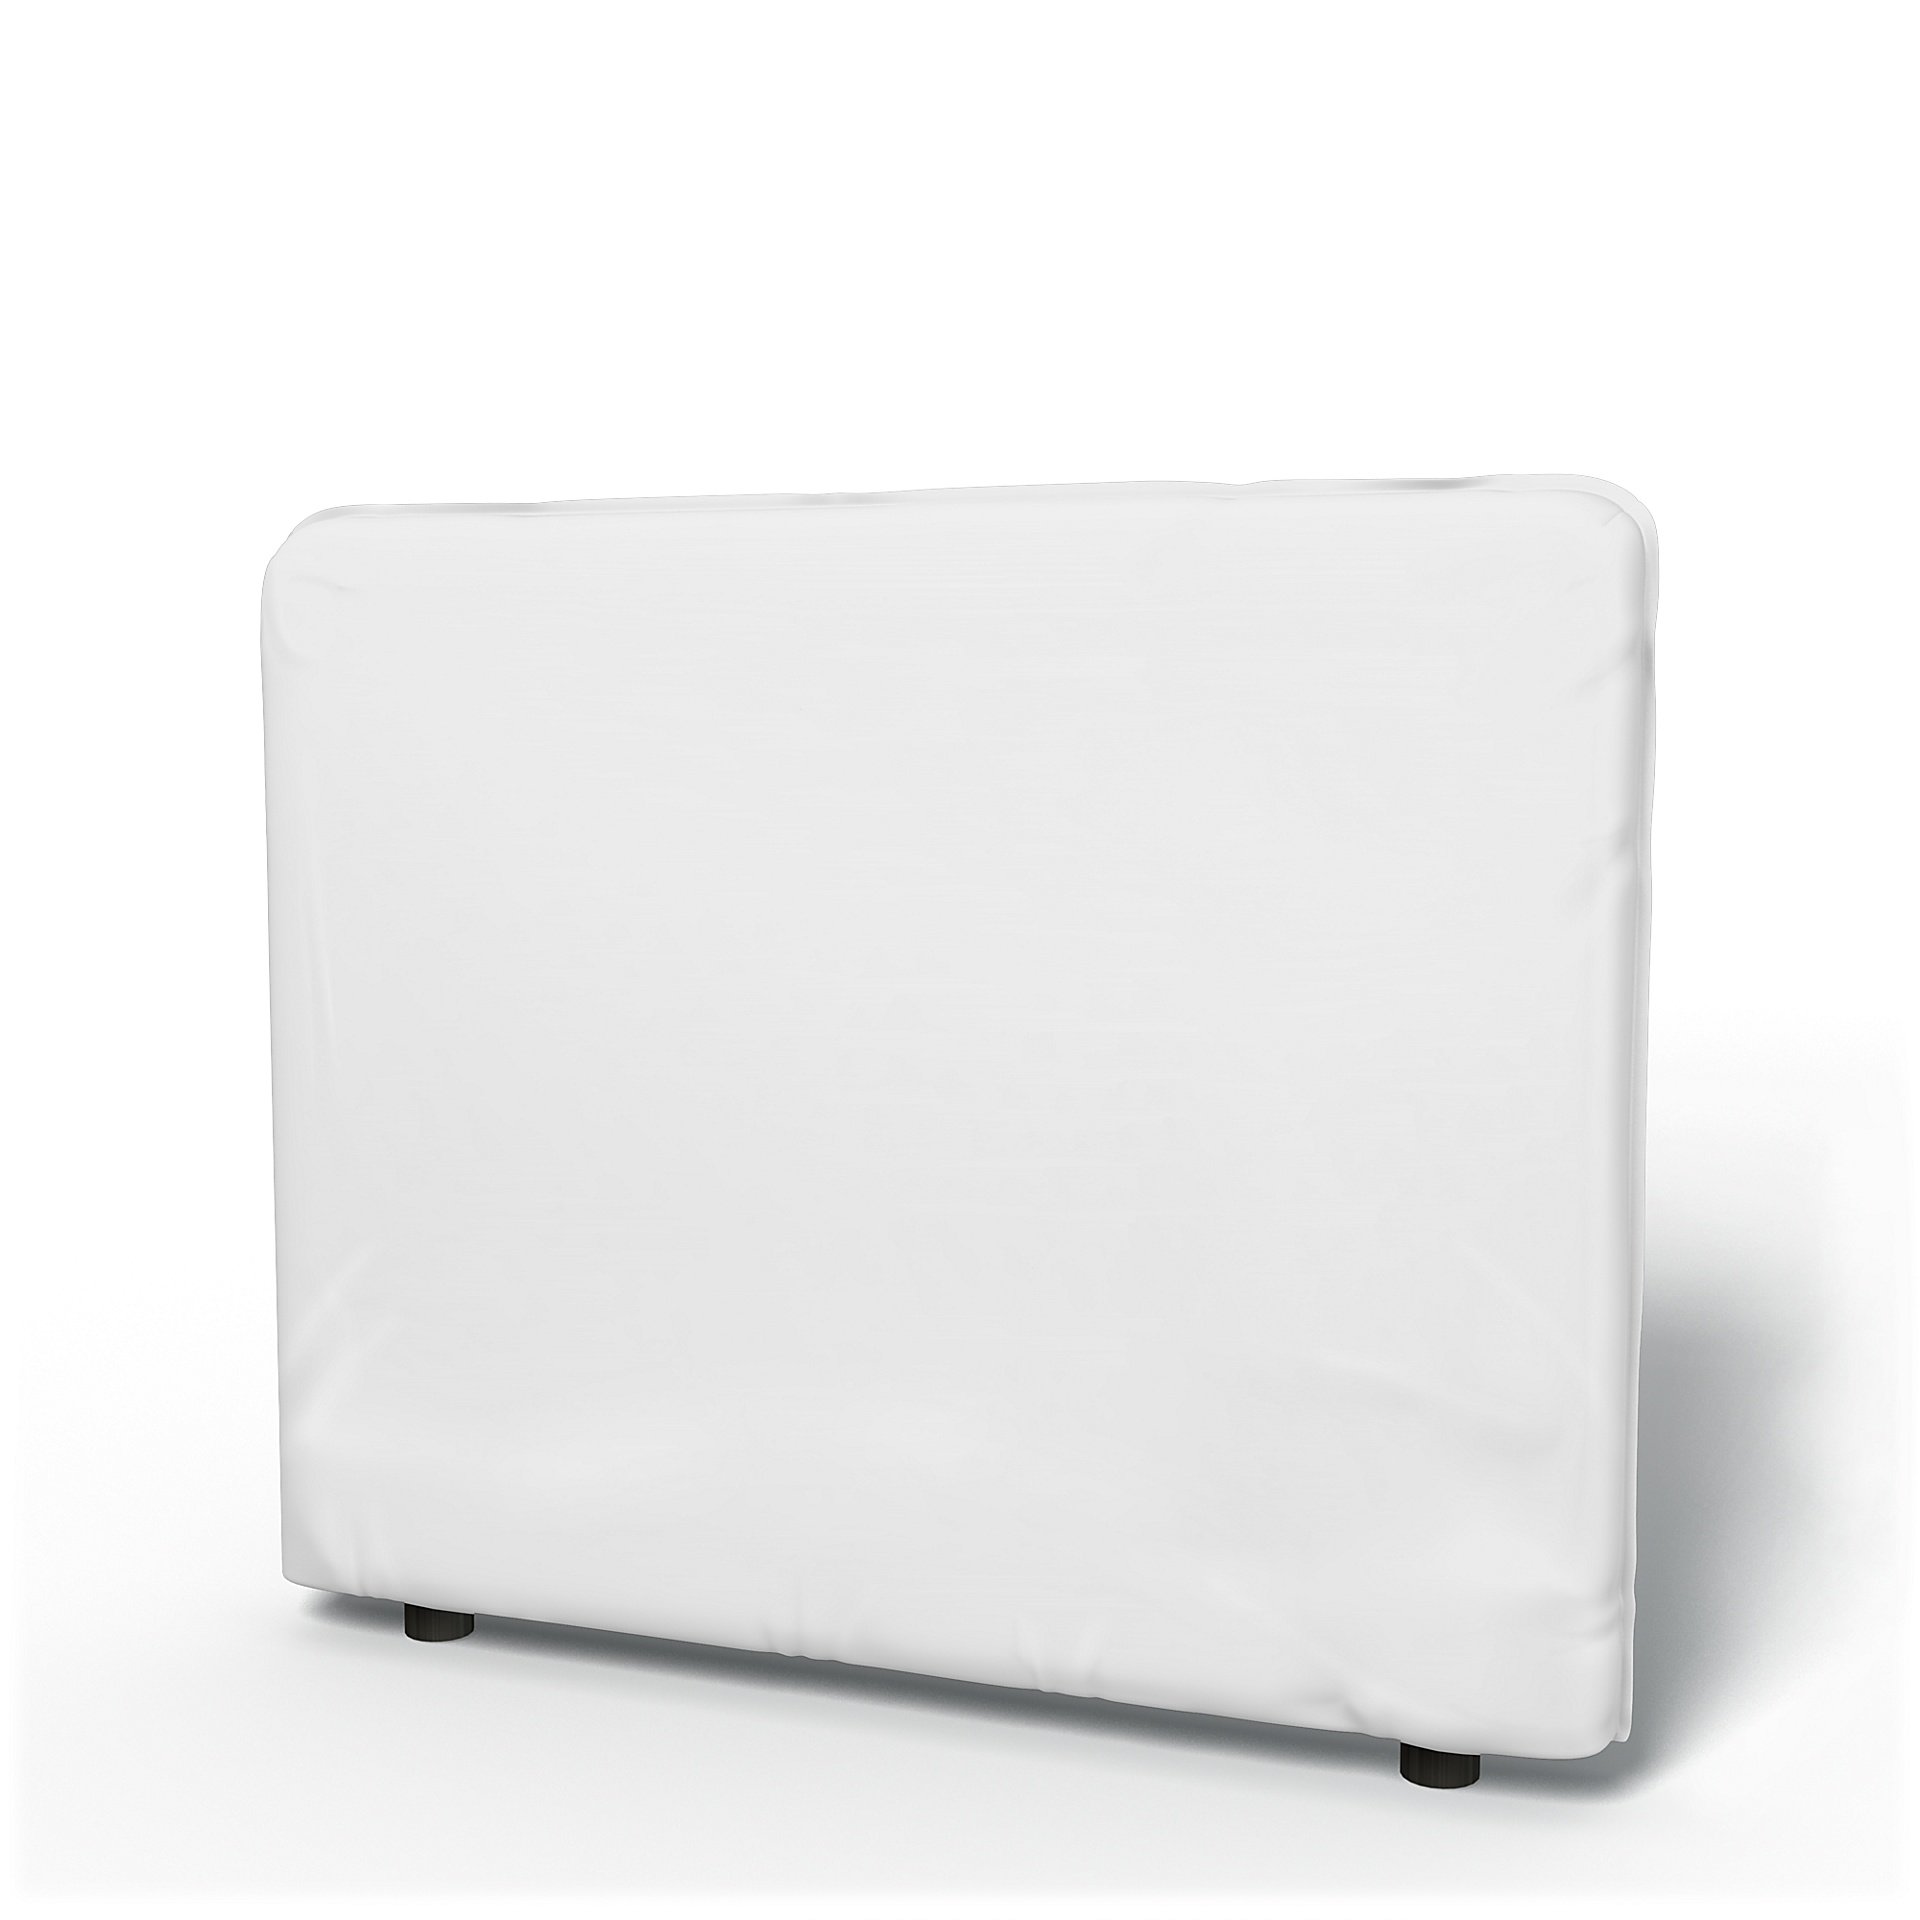 IKEA - Vallentuna Low Backrest Cover 100x80cm 39x32in, Absolute White, Linen - Bemz